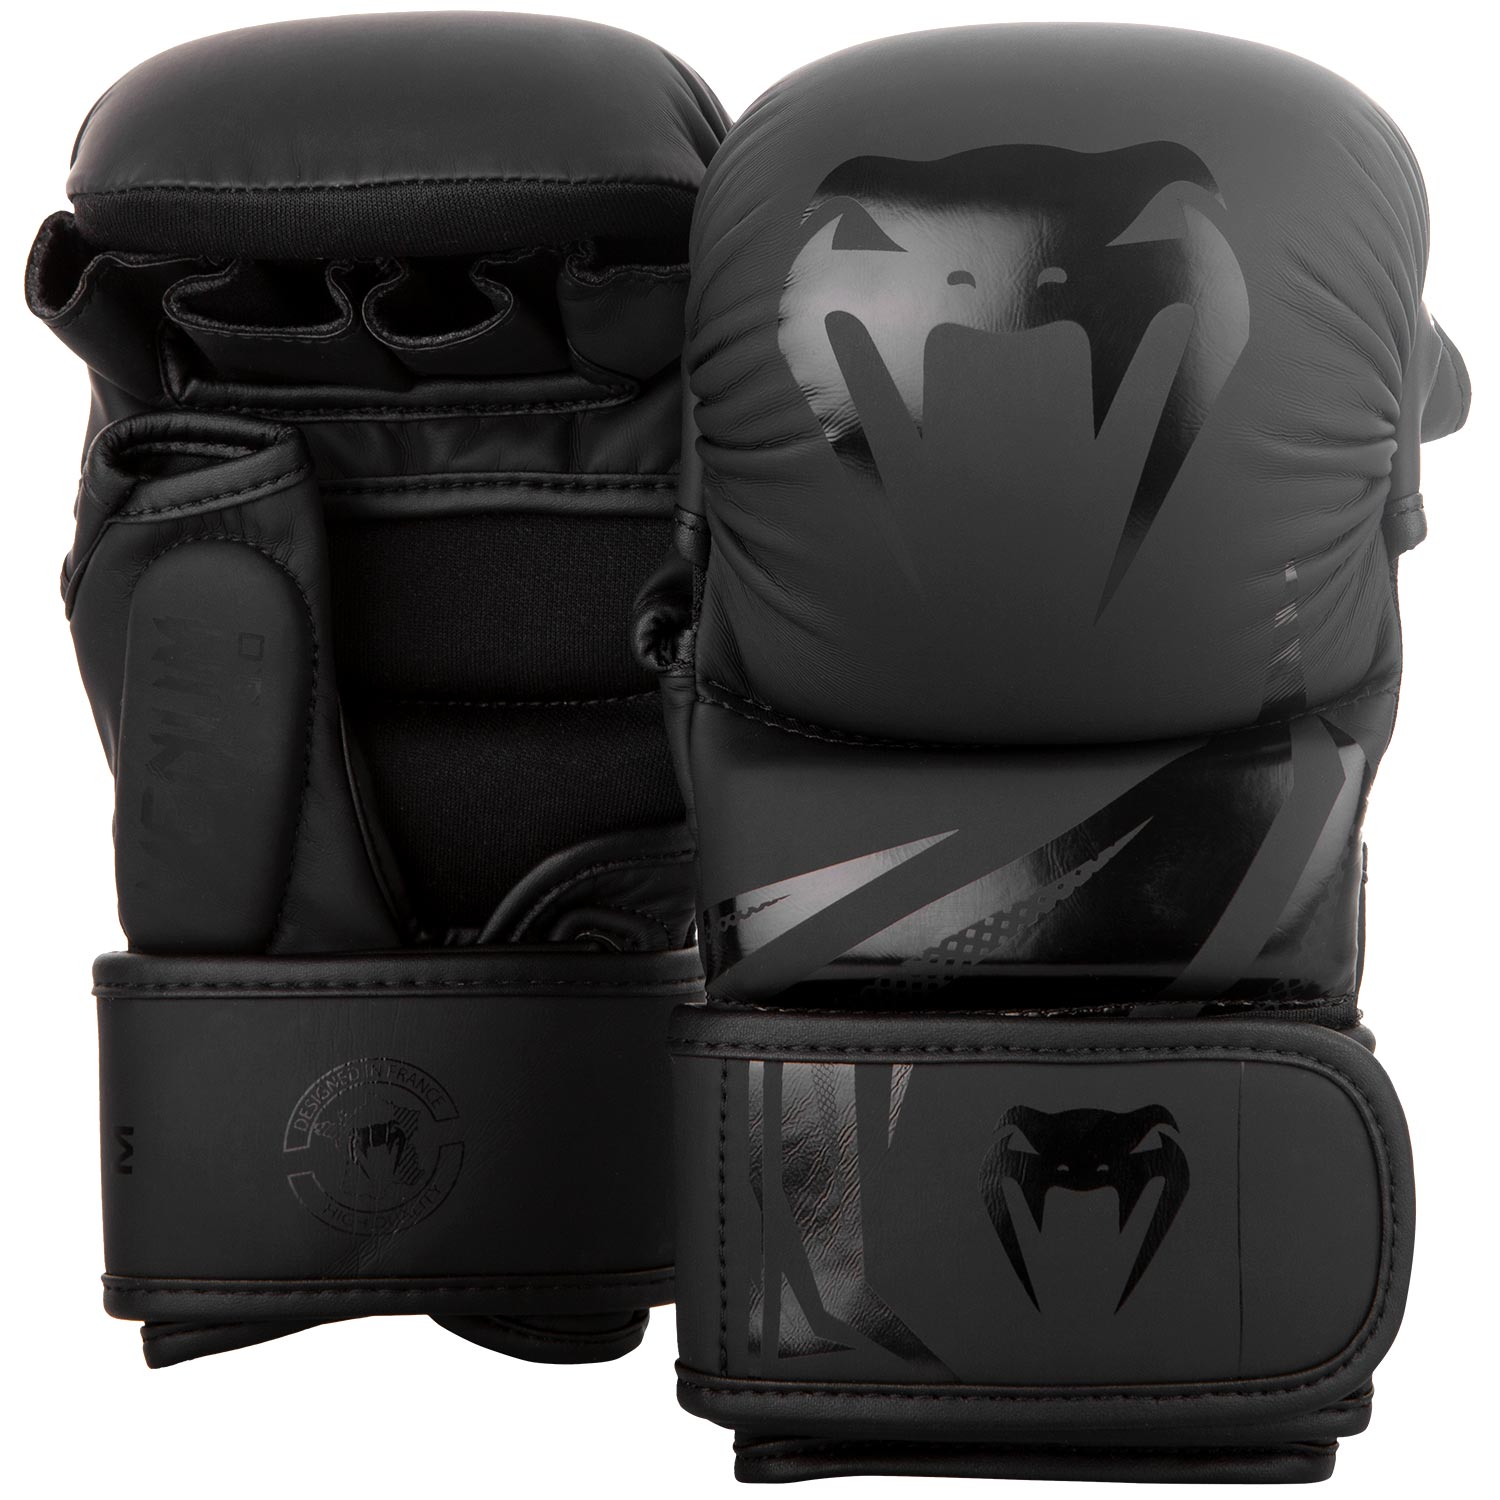 MMA sparring rukavice Challenger 3.0 černé VENUM vel. S